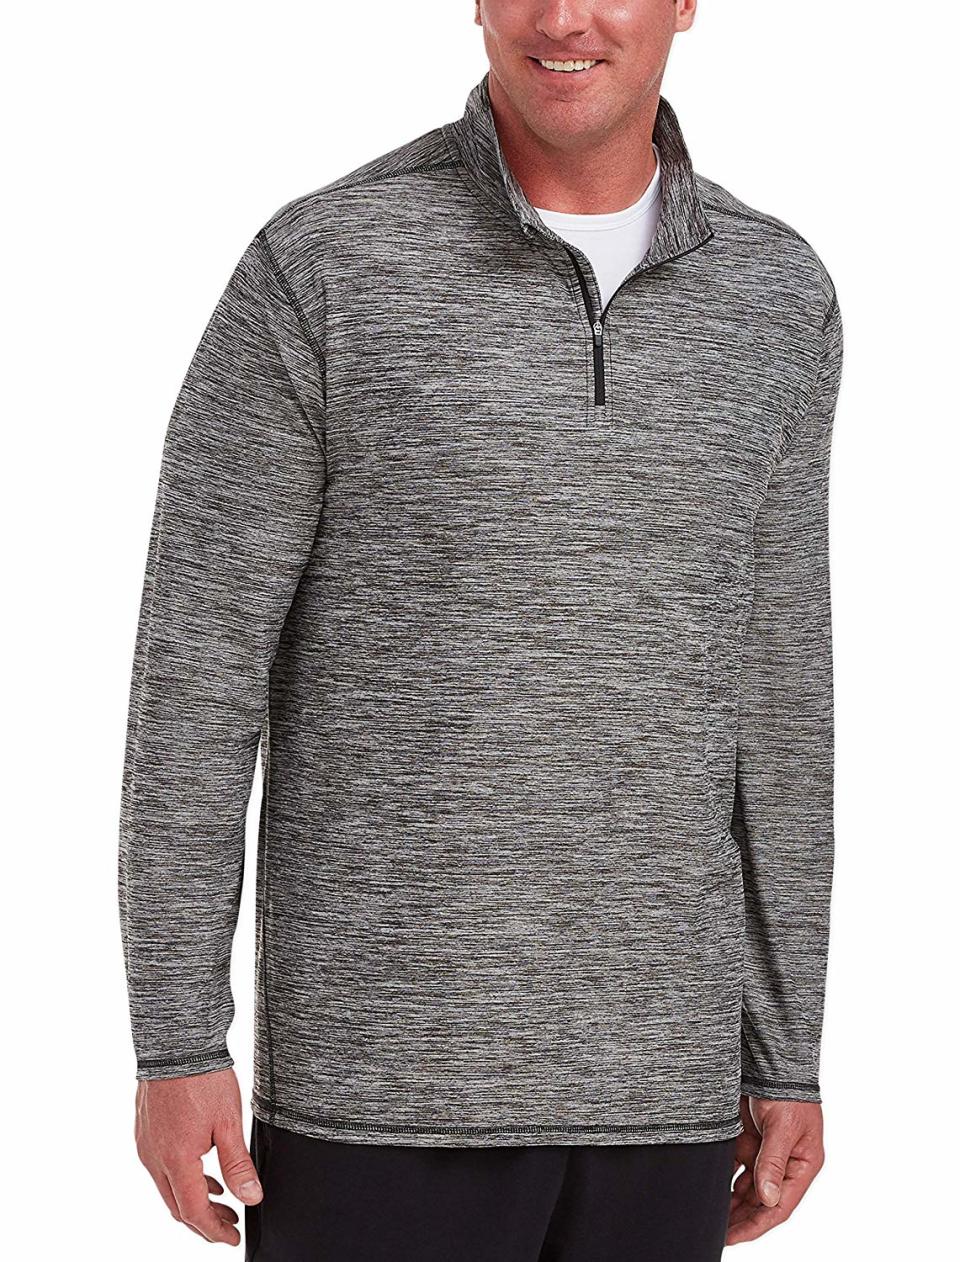 Amazon Essentials Men’s Tech Stretch Sweater. (Photo: Amazon)